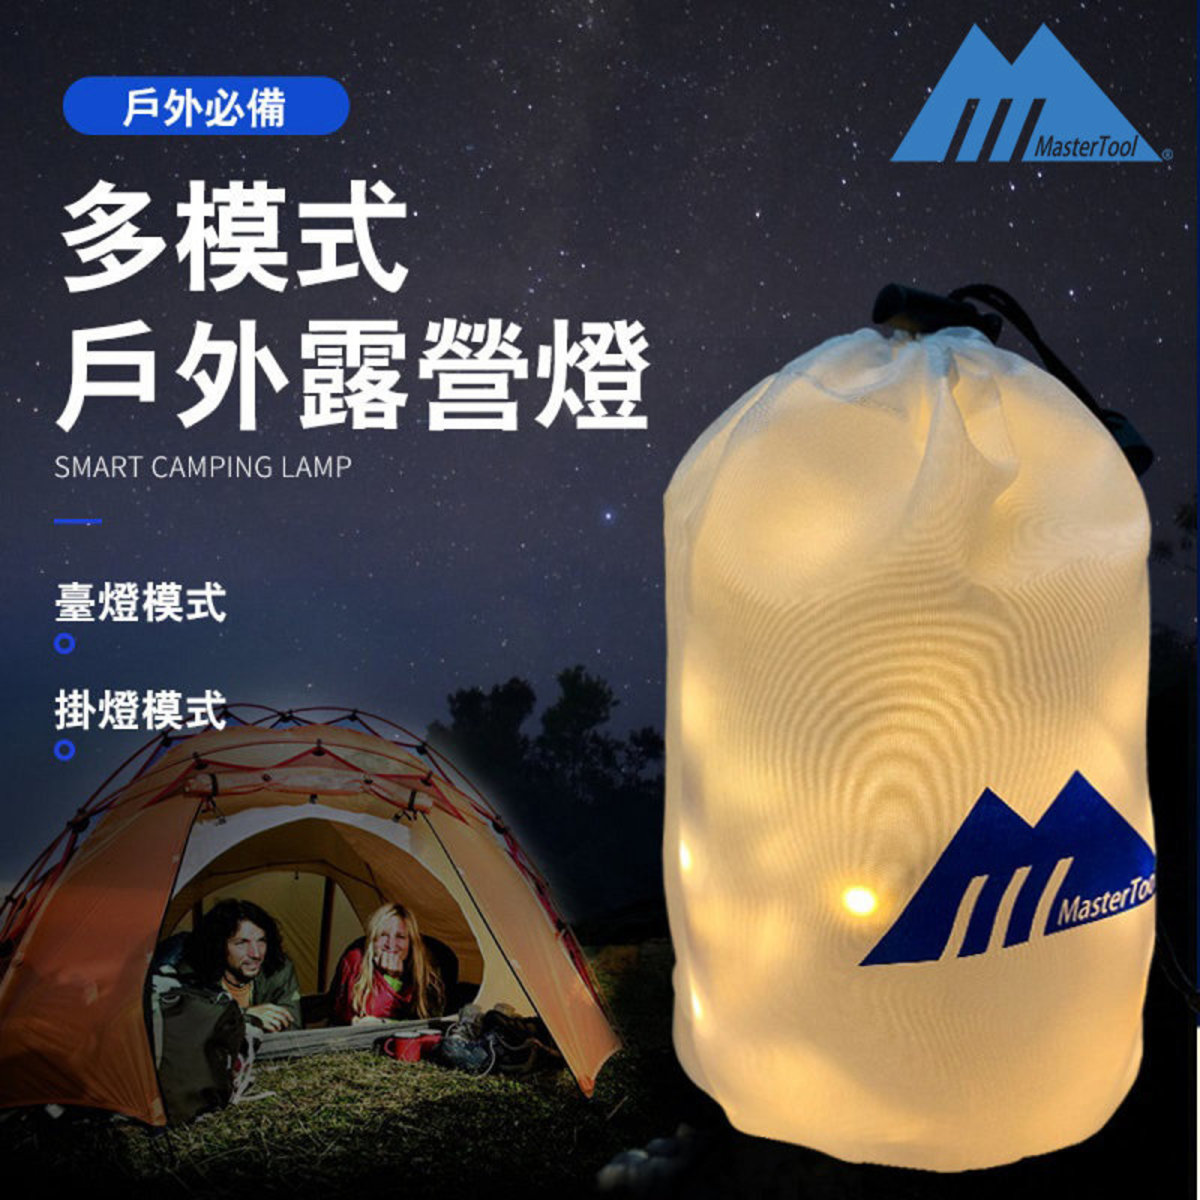 LED Strap Lantern, LED Strap Rope, Camping Light, Waterproof USB Light (15 LED lights at 1.5 meters)